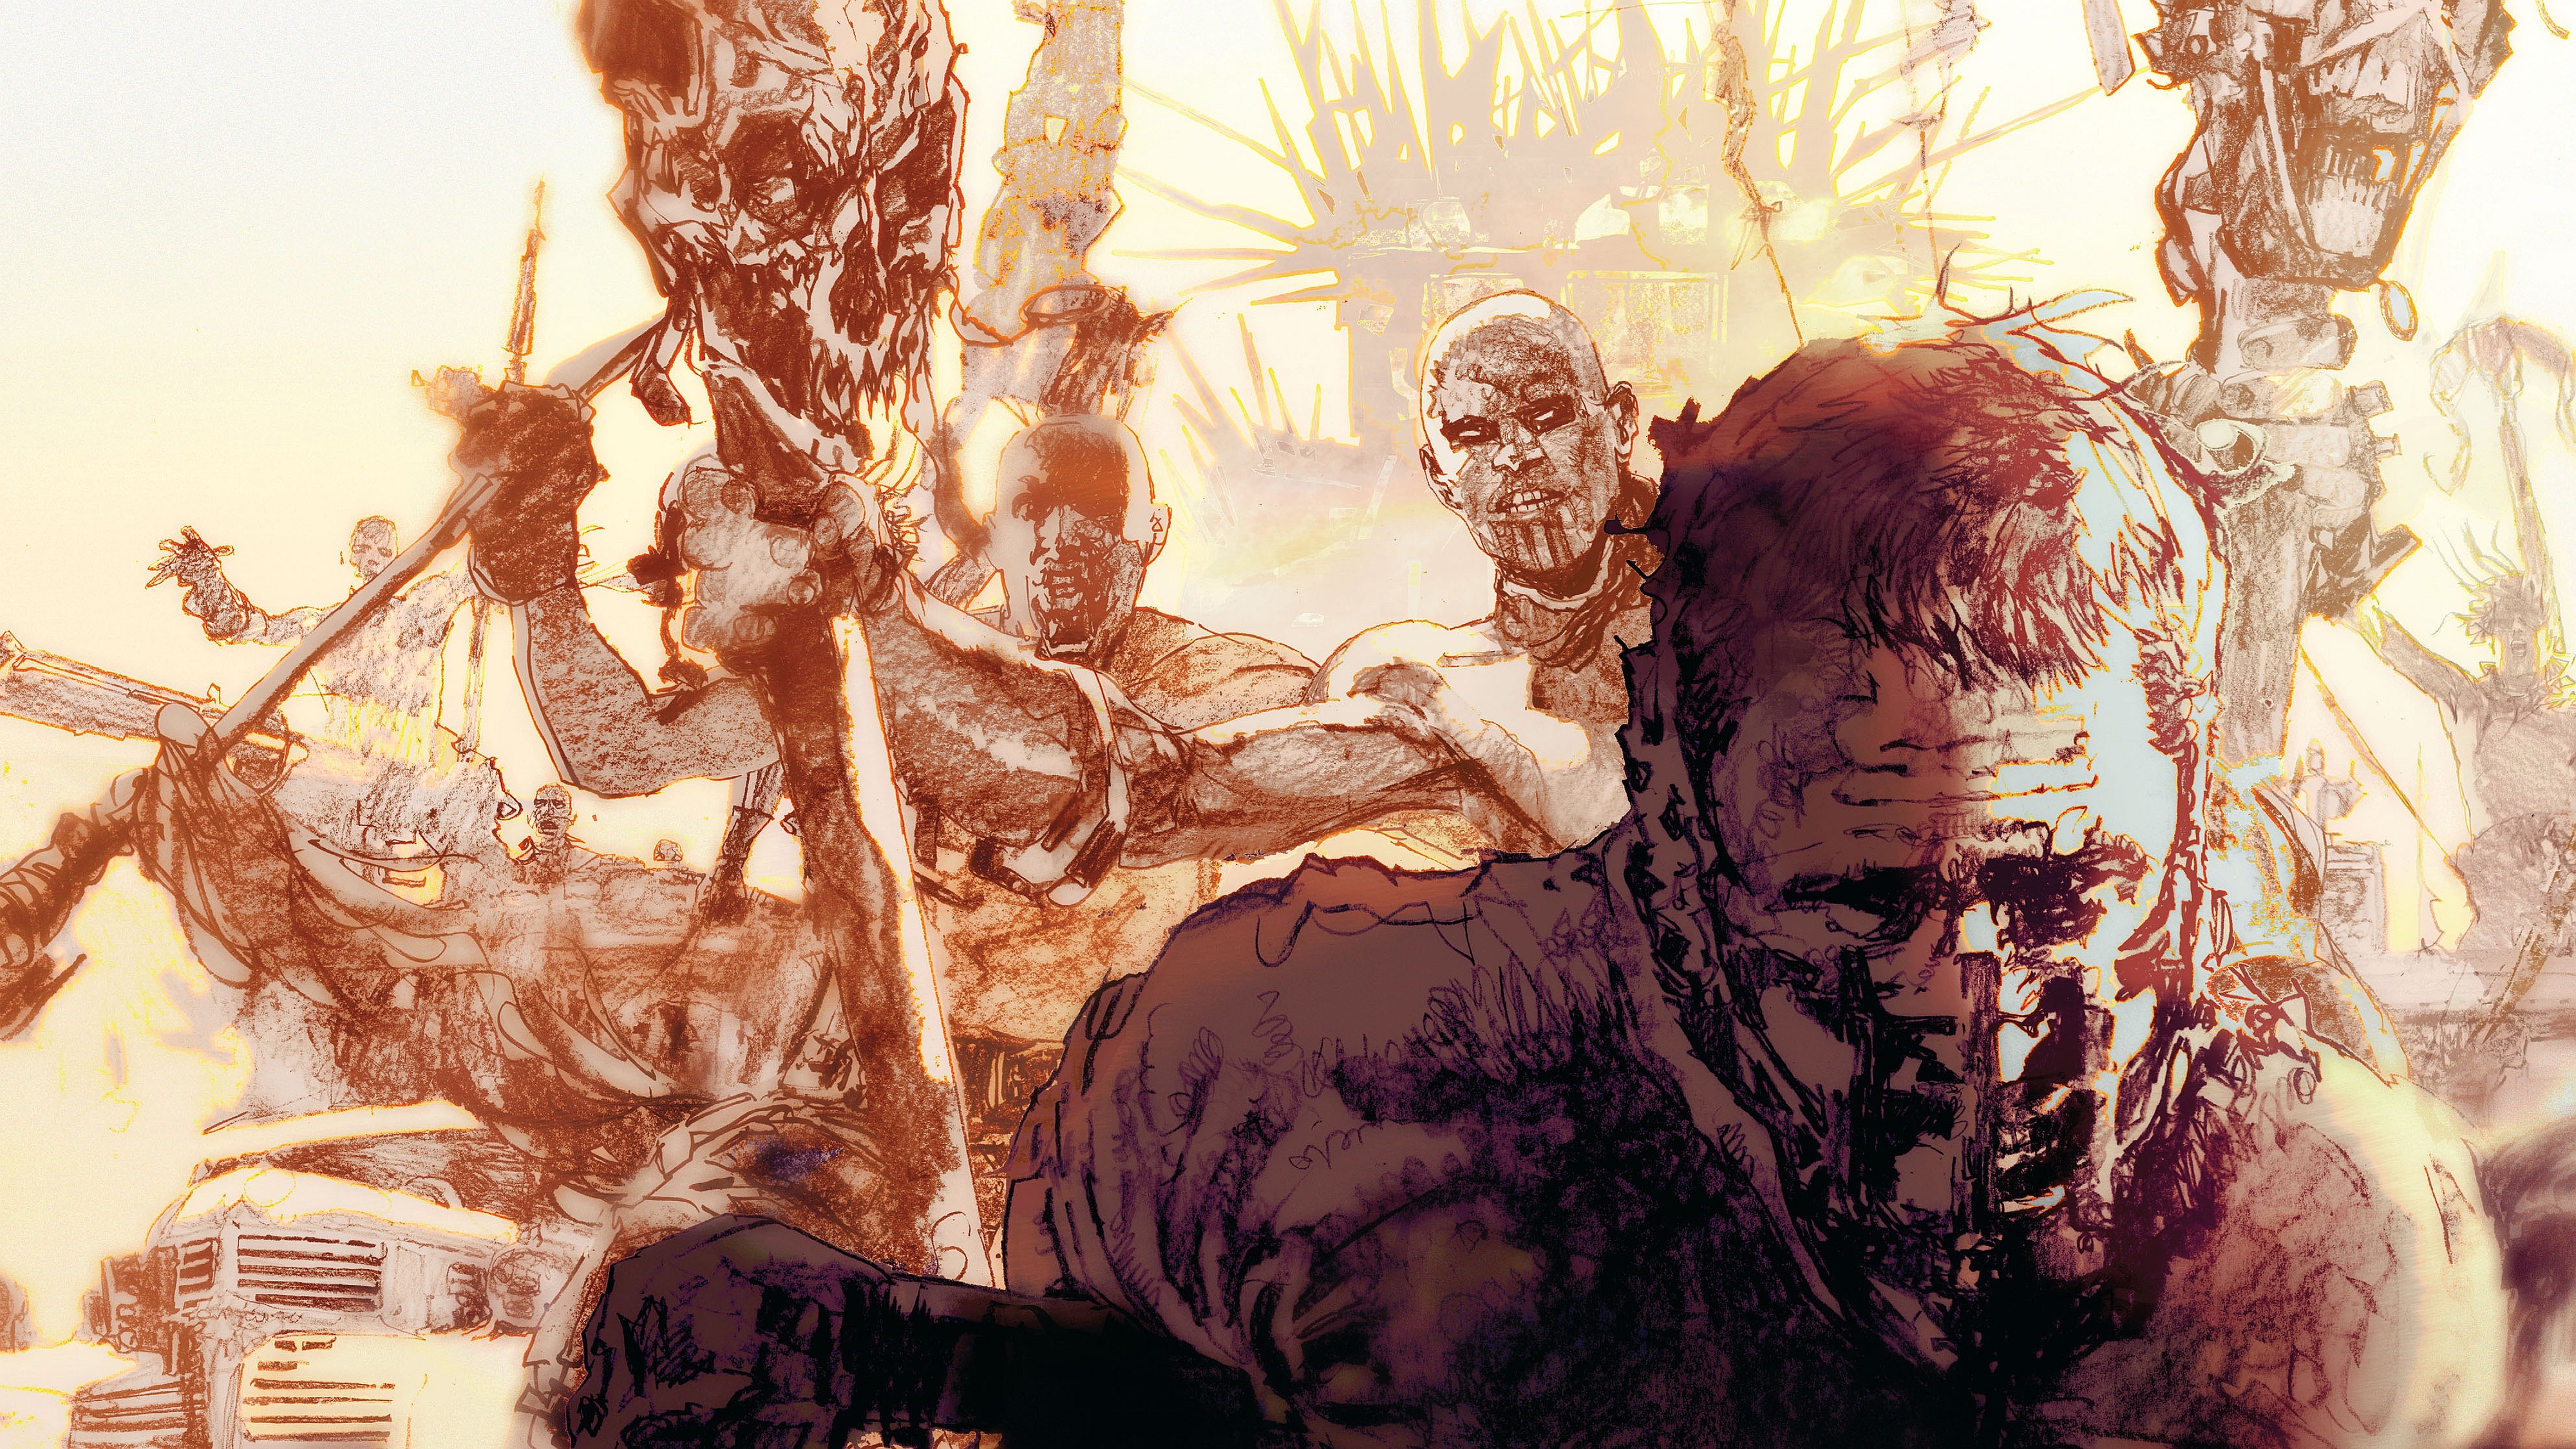 General 4000x2250 Mad Max Mad Max: Fury Road skull movies artwork apocalyptic dystopian